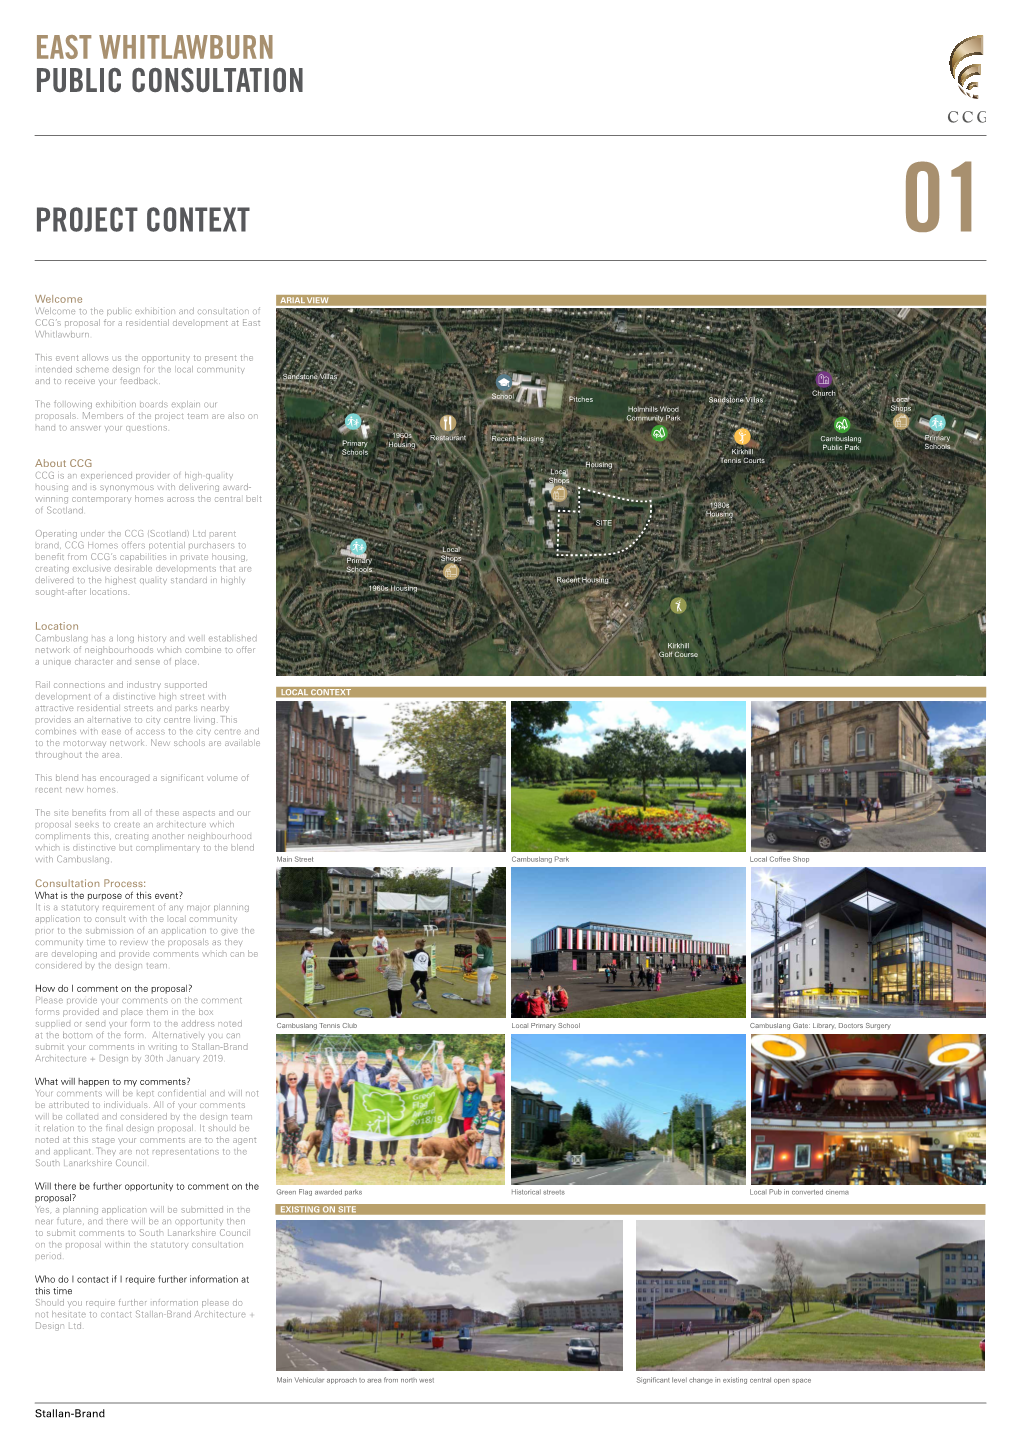 East Whitlawburn Public Consultation Project Context